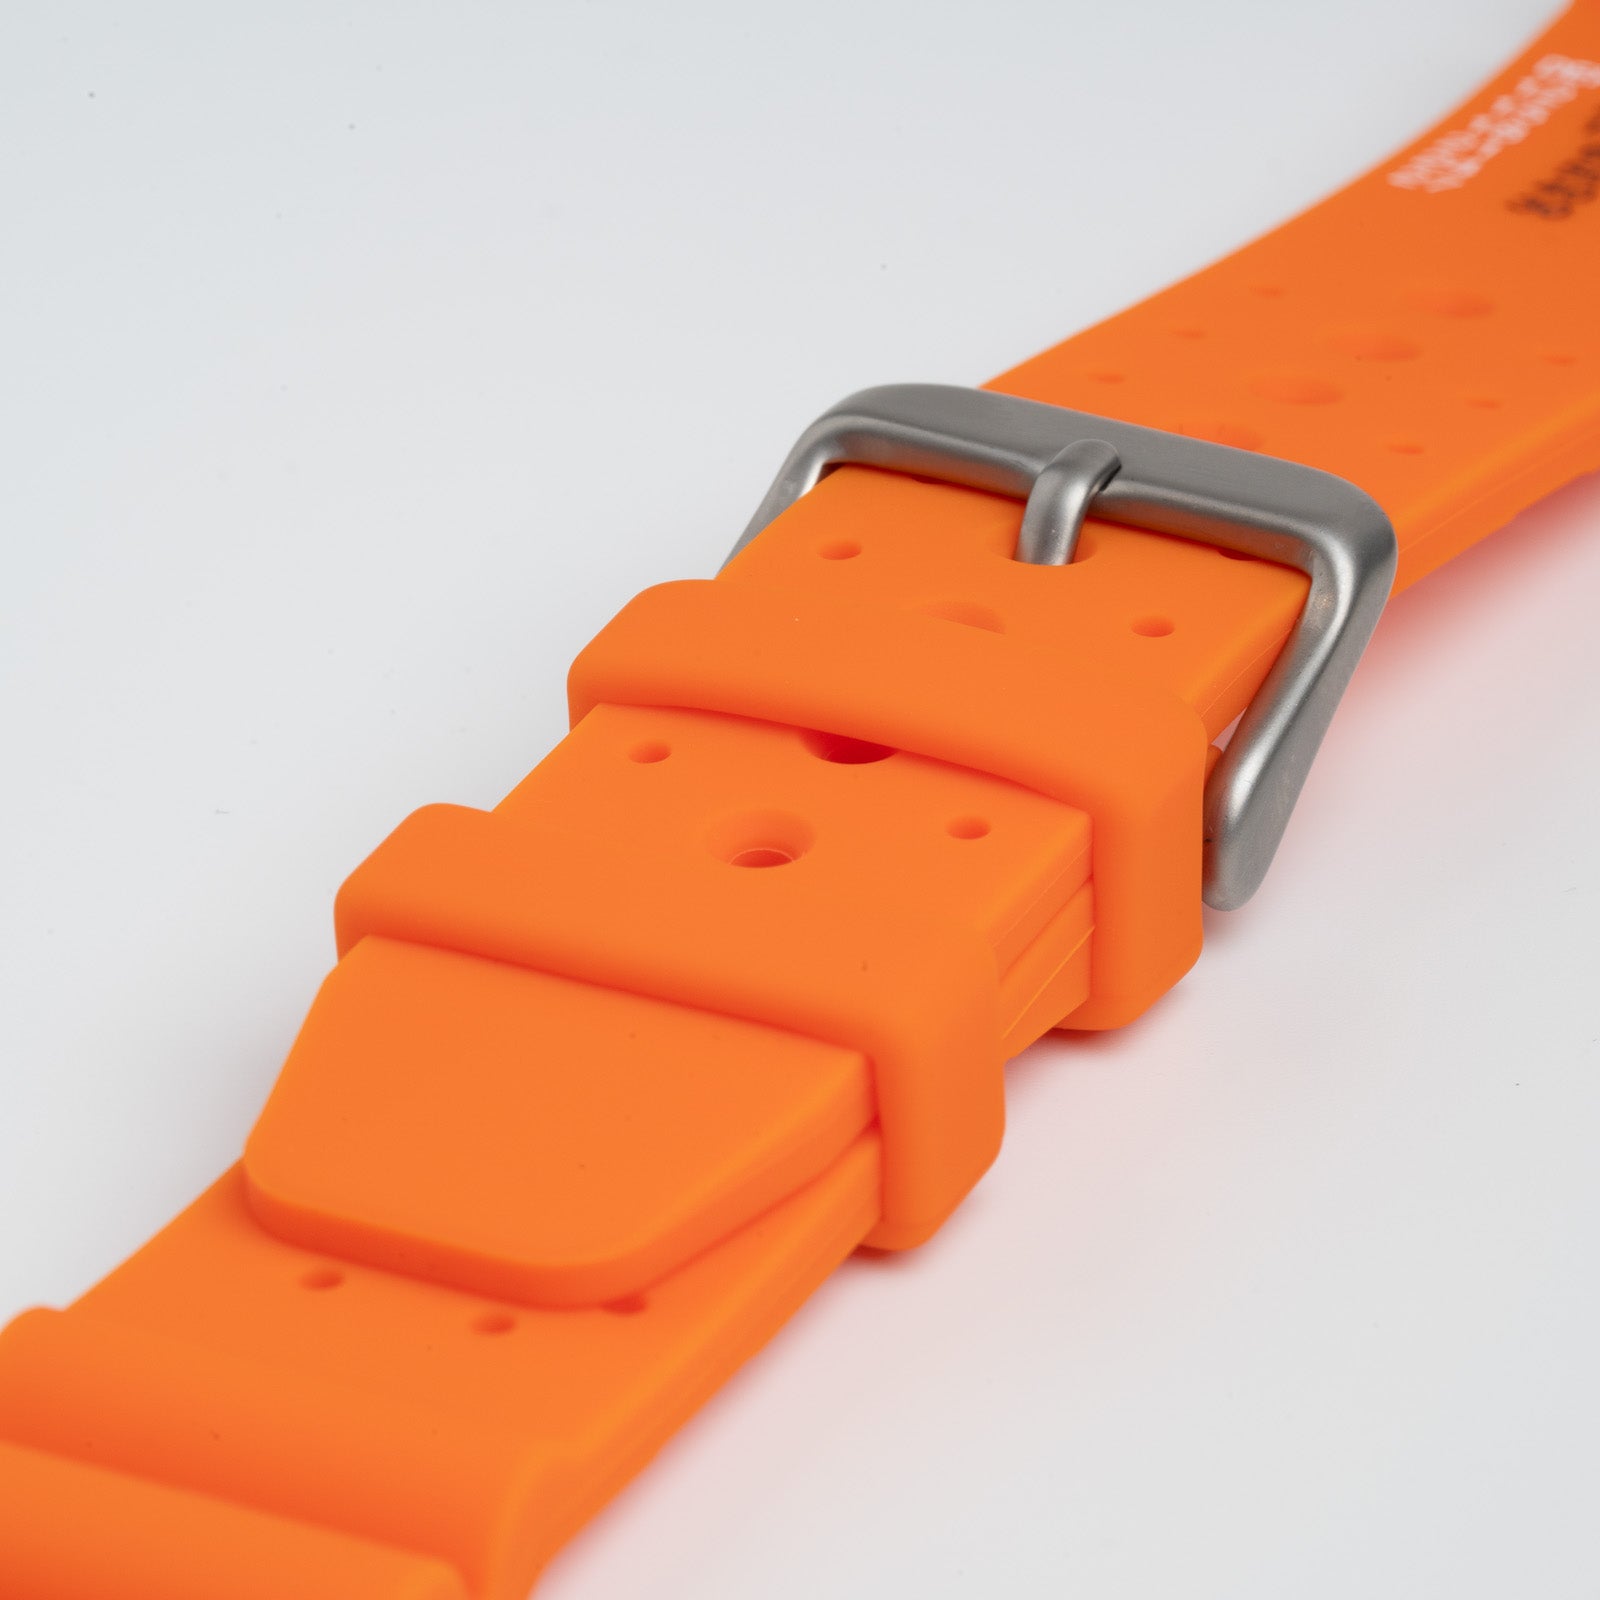 Submerge ND Limits Orange Watch Strap